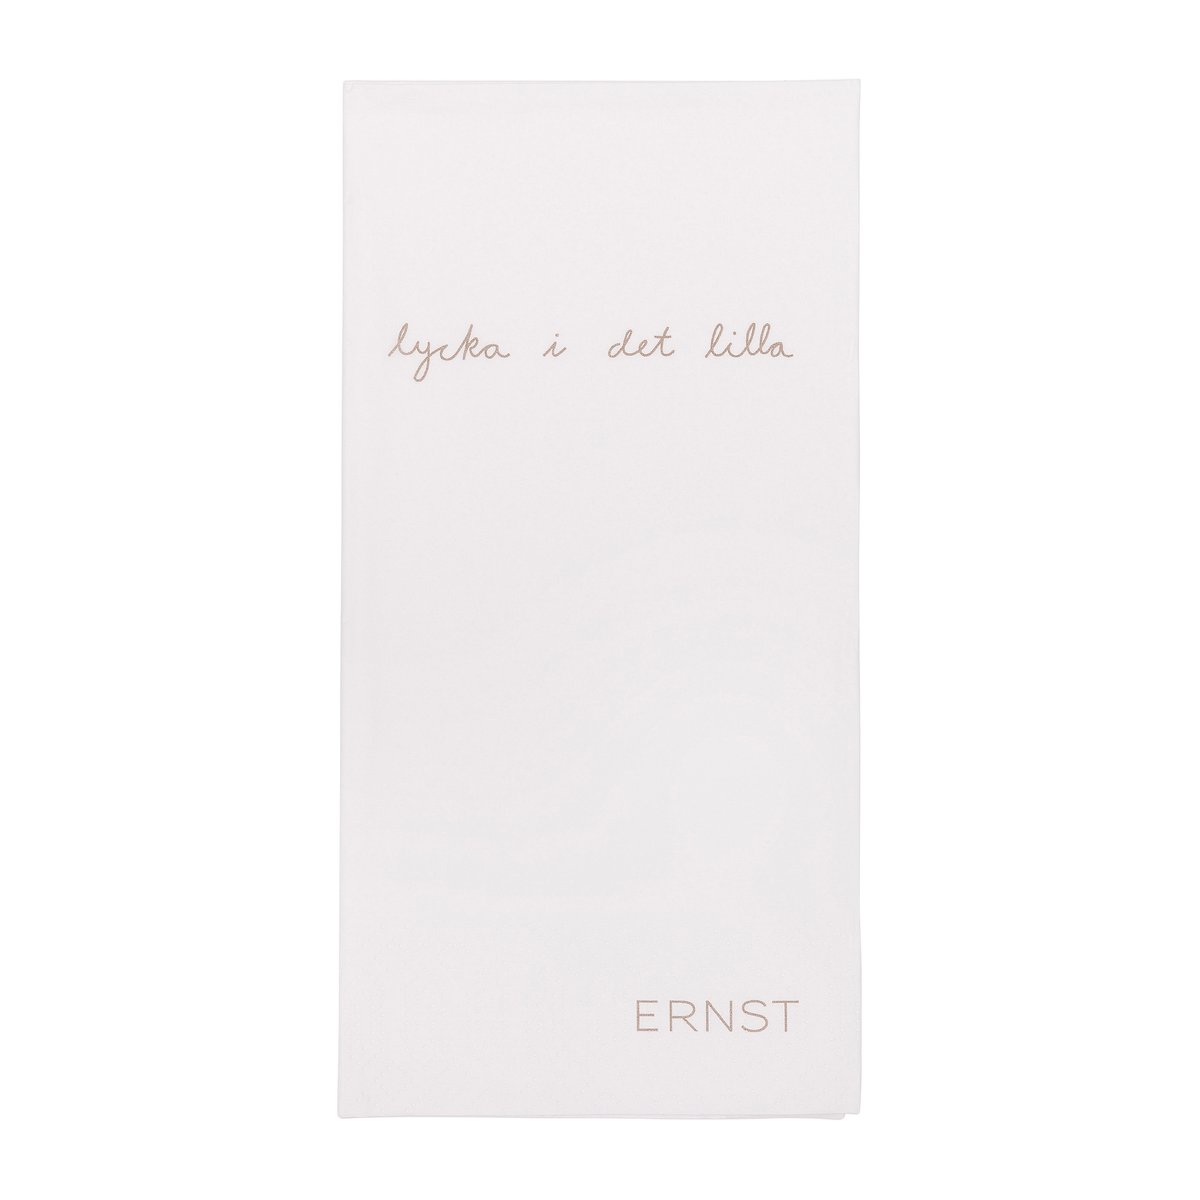 ERNST Ernst serviet med citatet “Lycka i det lilla” 20-pak Hvid-Grå